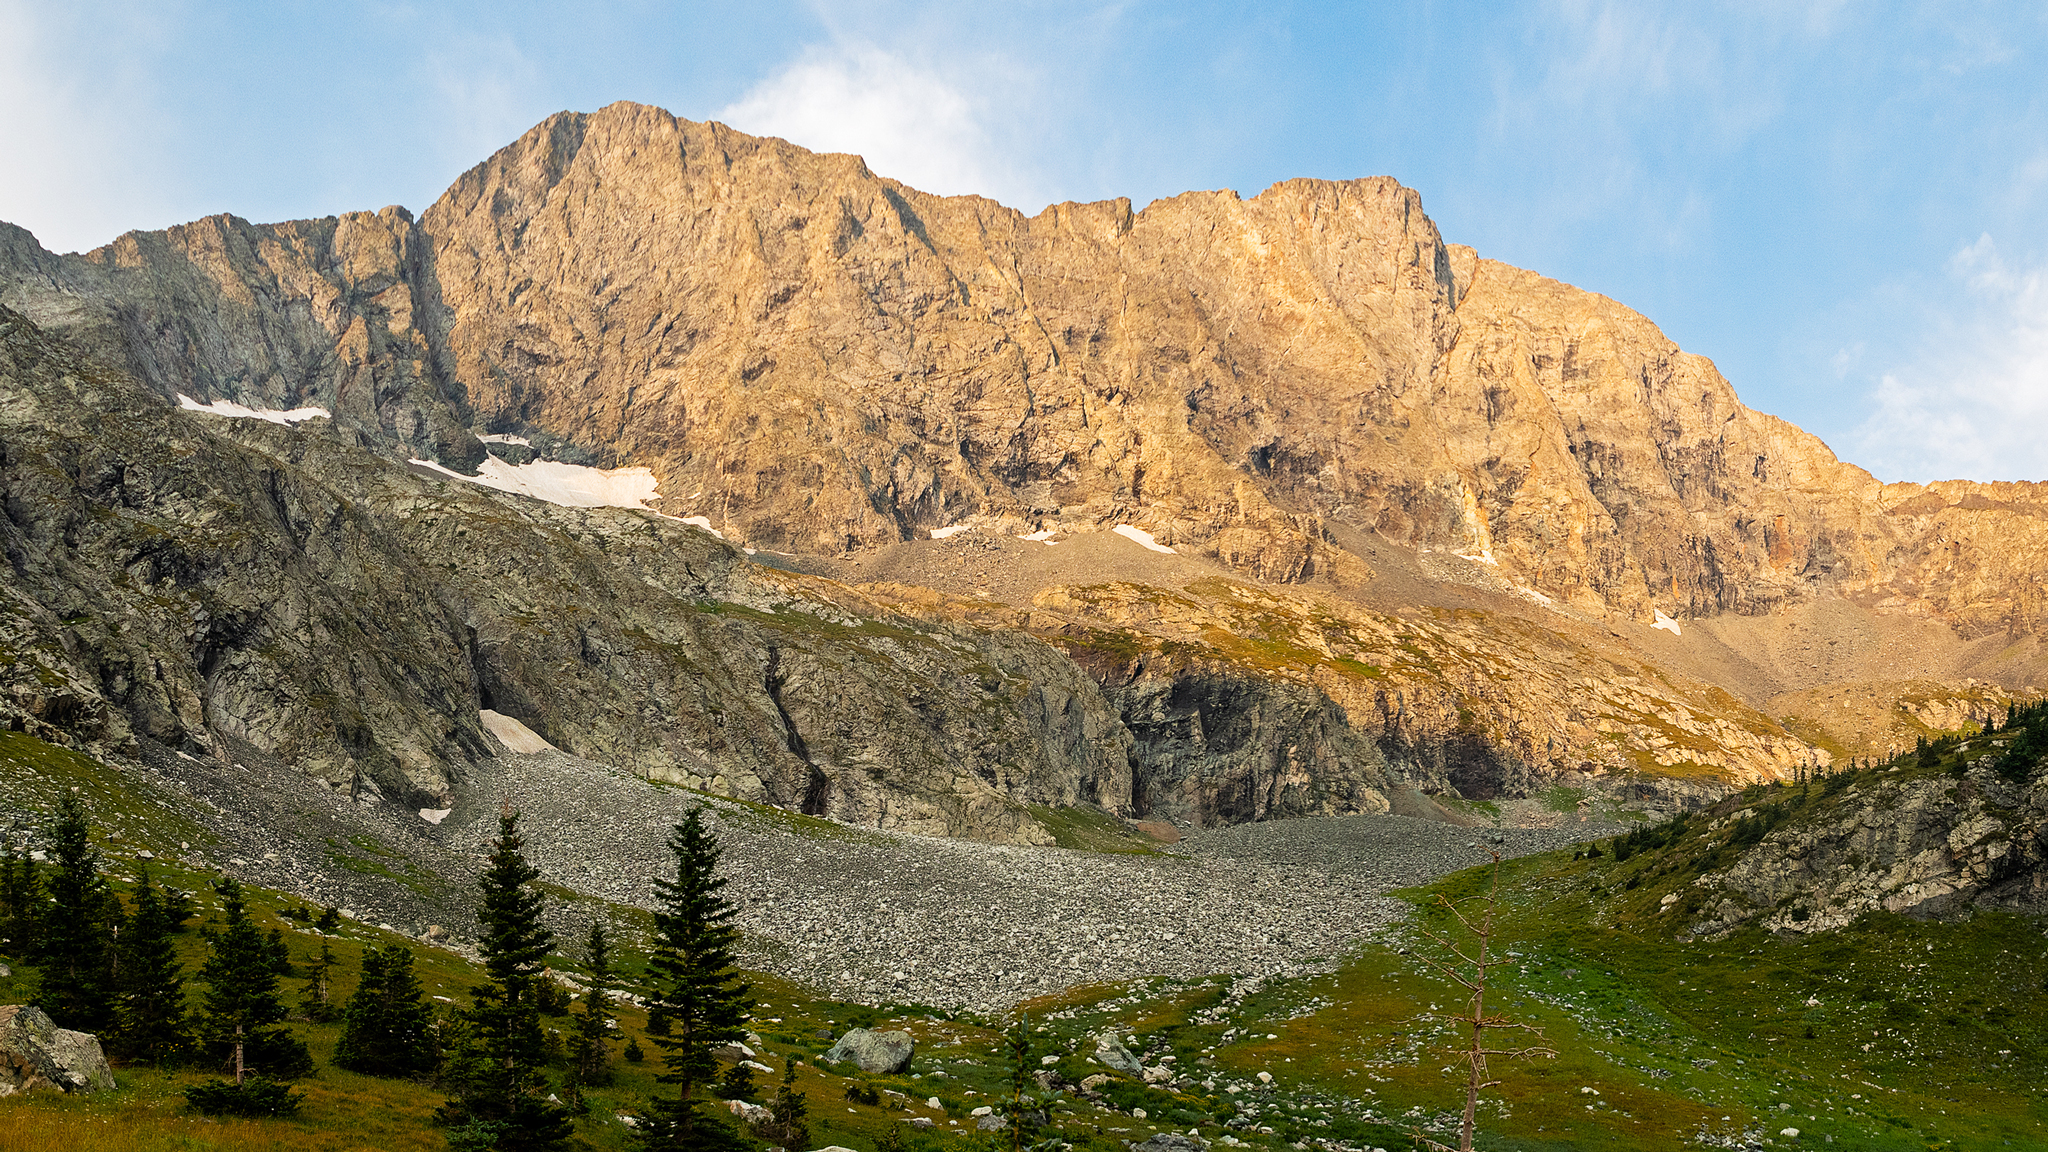 Gash Ridge, Blanca Peak